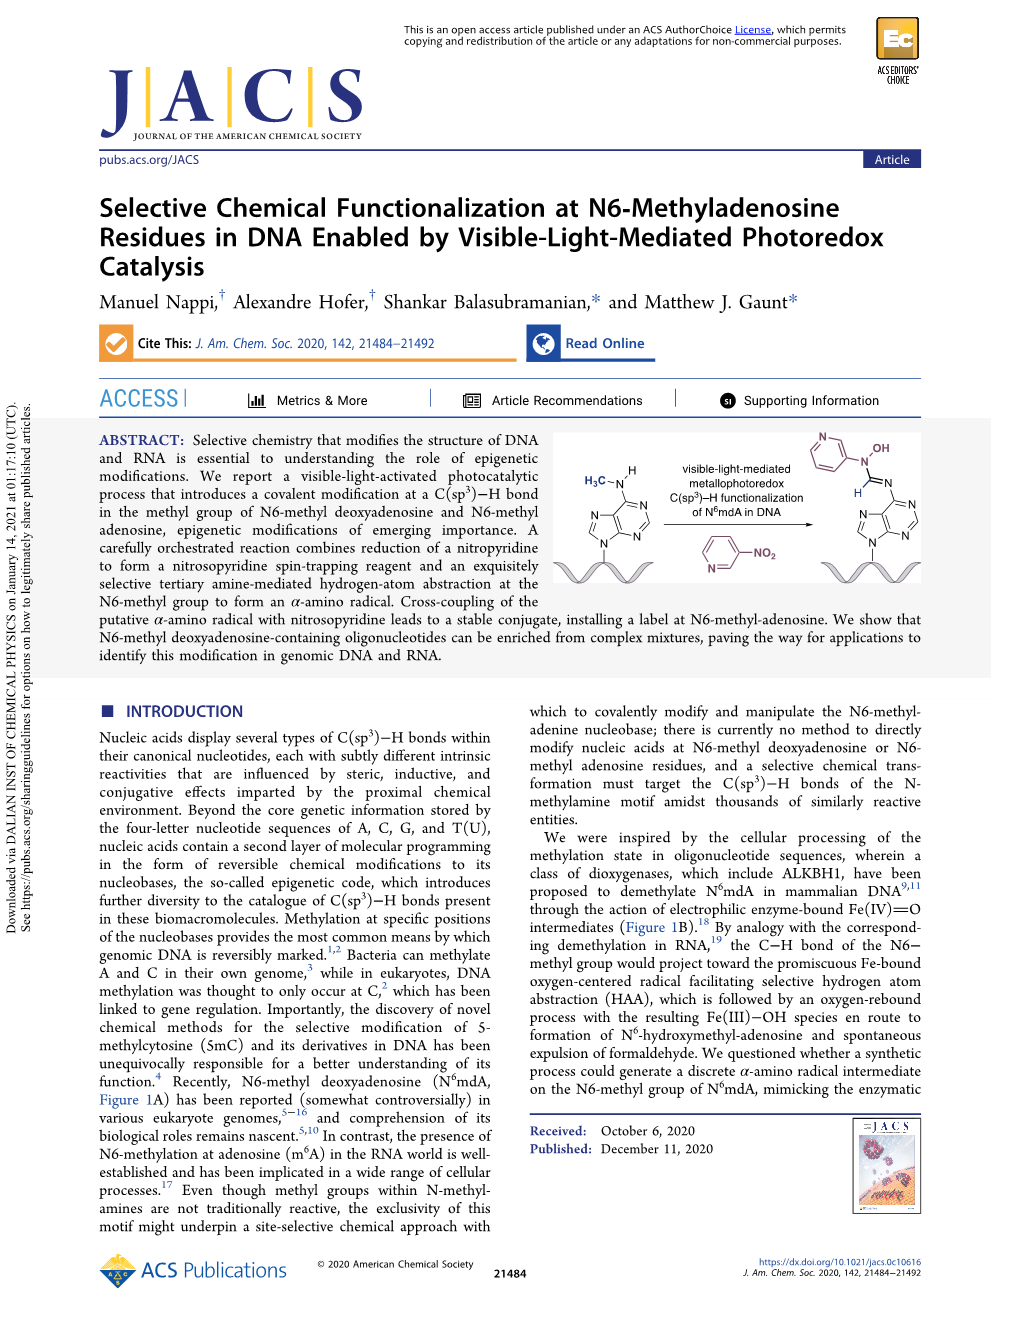 Selective Chemical Functionalization at N6-Methyladenosine Residues In